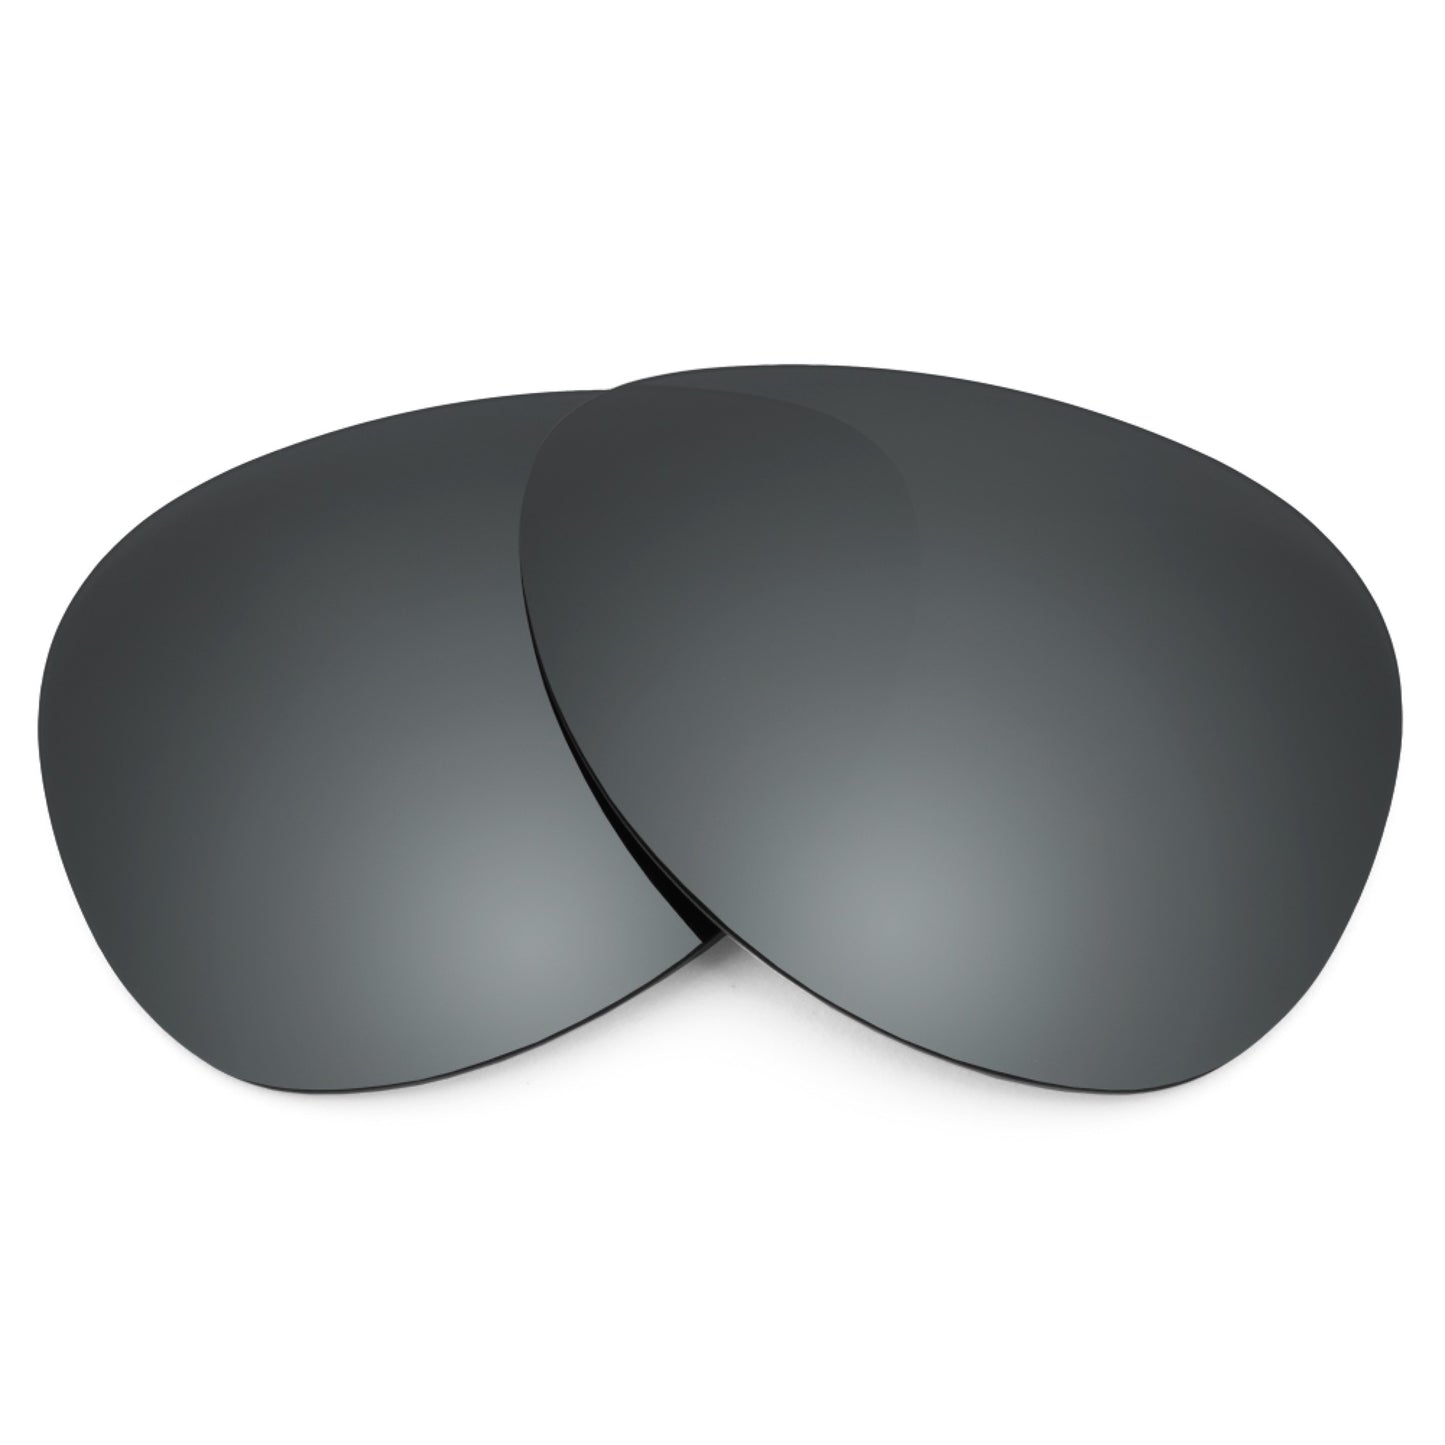 Revant replacement lenses for Ray-Ban RB4189 64mm Elite Polarized Black Chrome